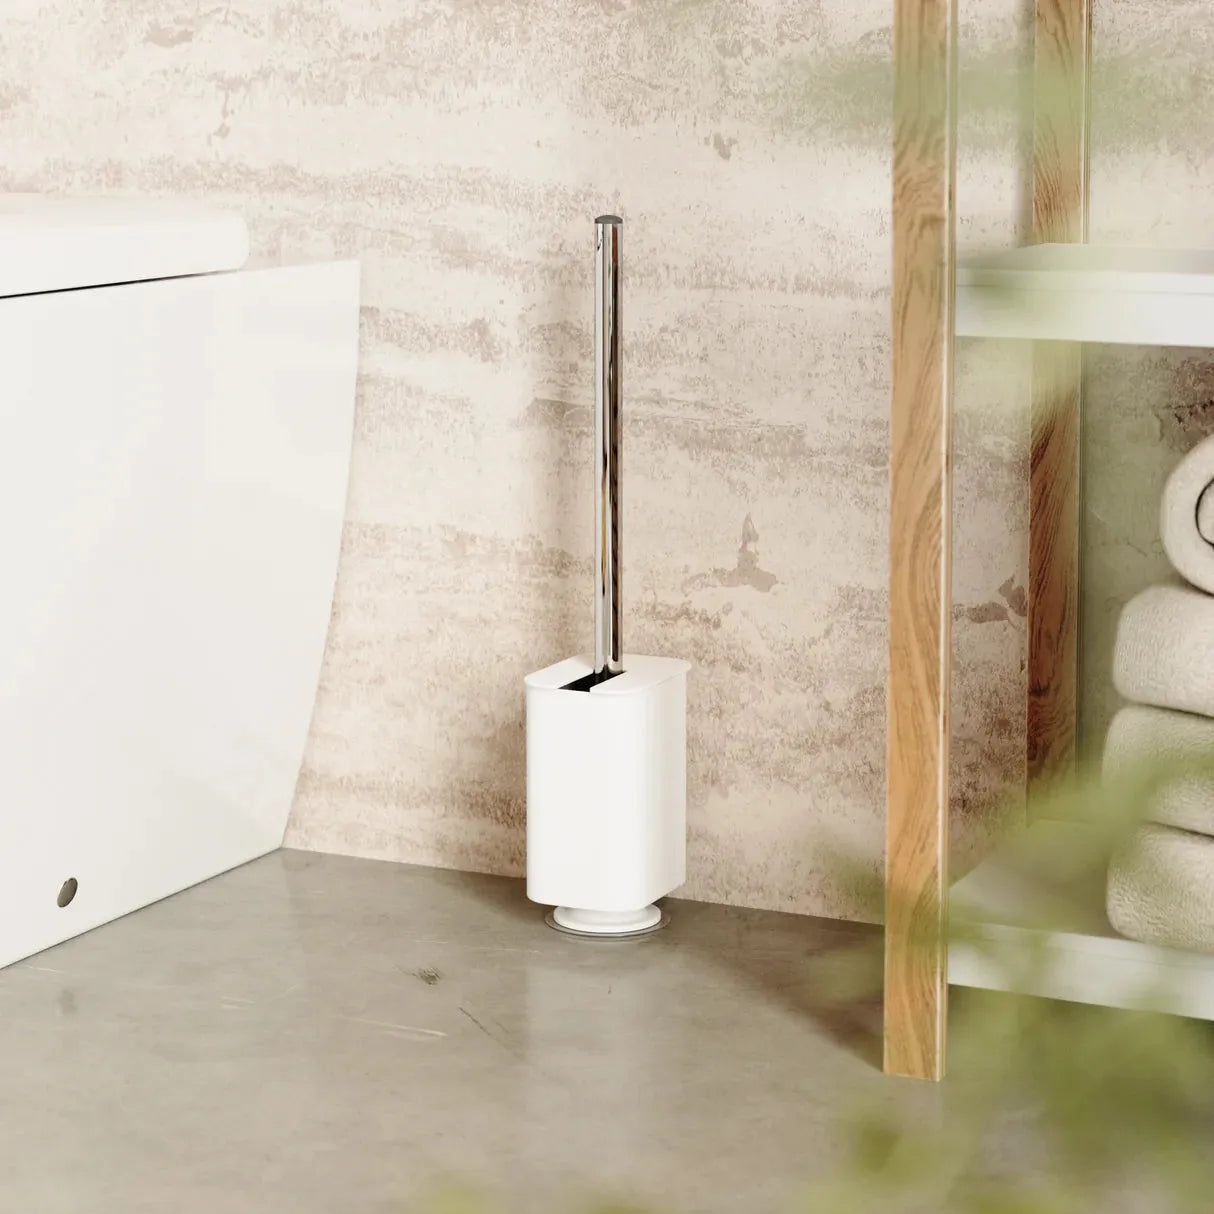 contemporary bathroom design minimal white toilet cleaner holder